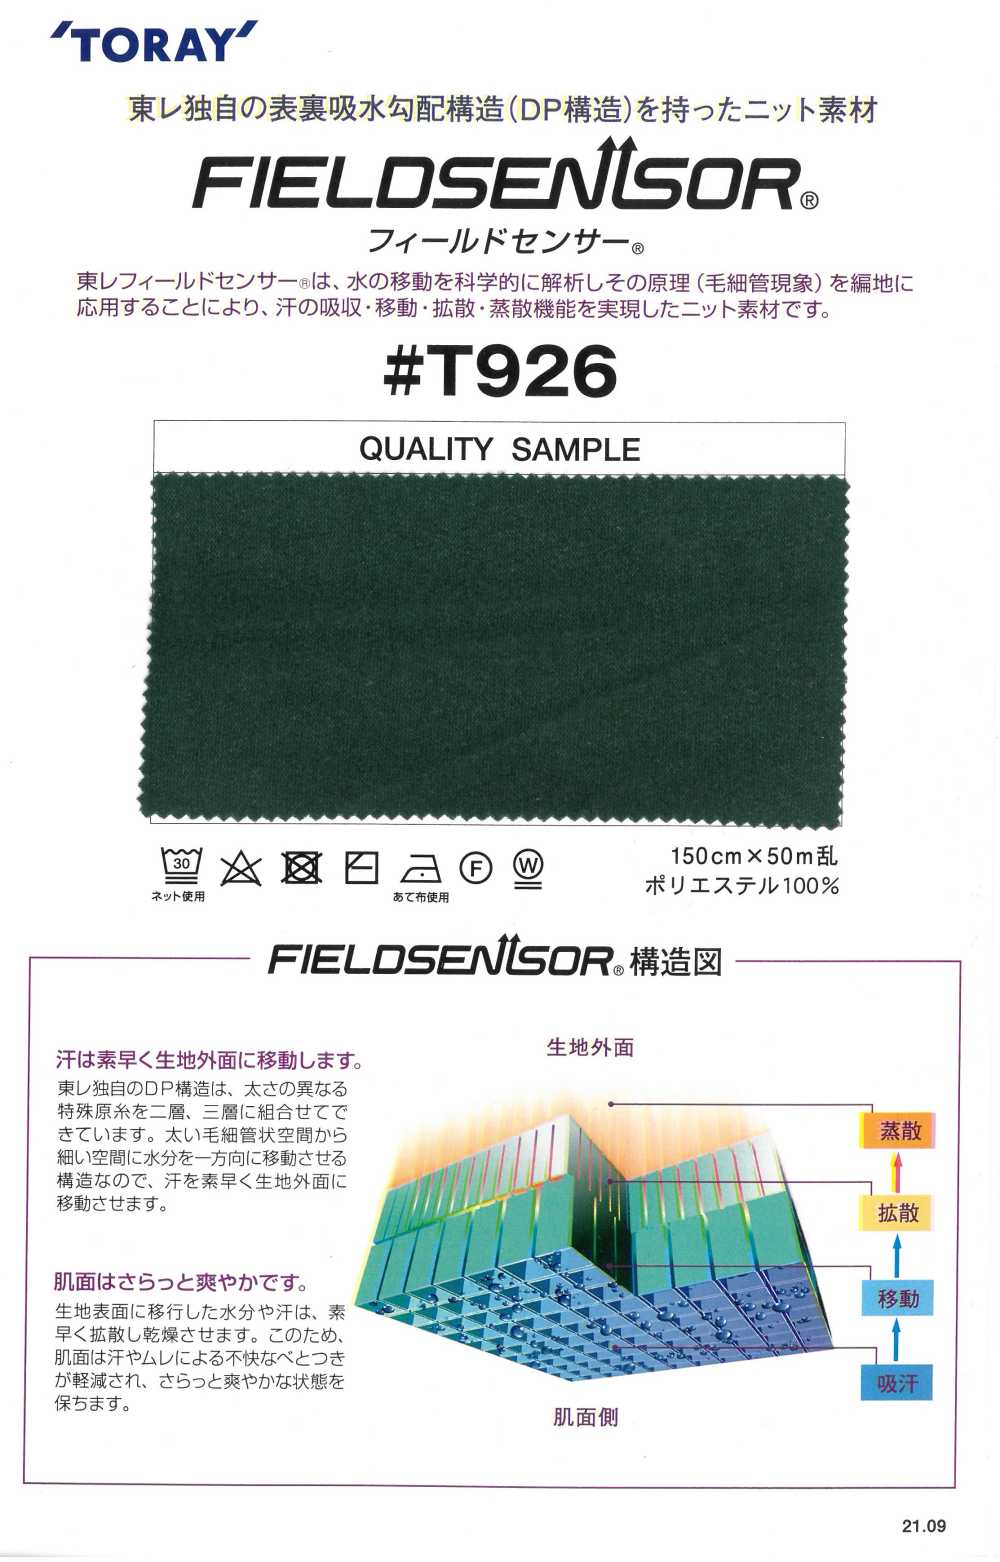 T926 TORAY Field Sensor® Strickmaterial Für Unterbekleidung (Fuzzy-Typ)[Textilgewebe] Tamurakoma